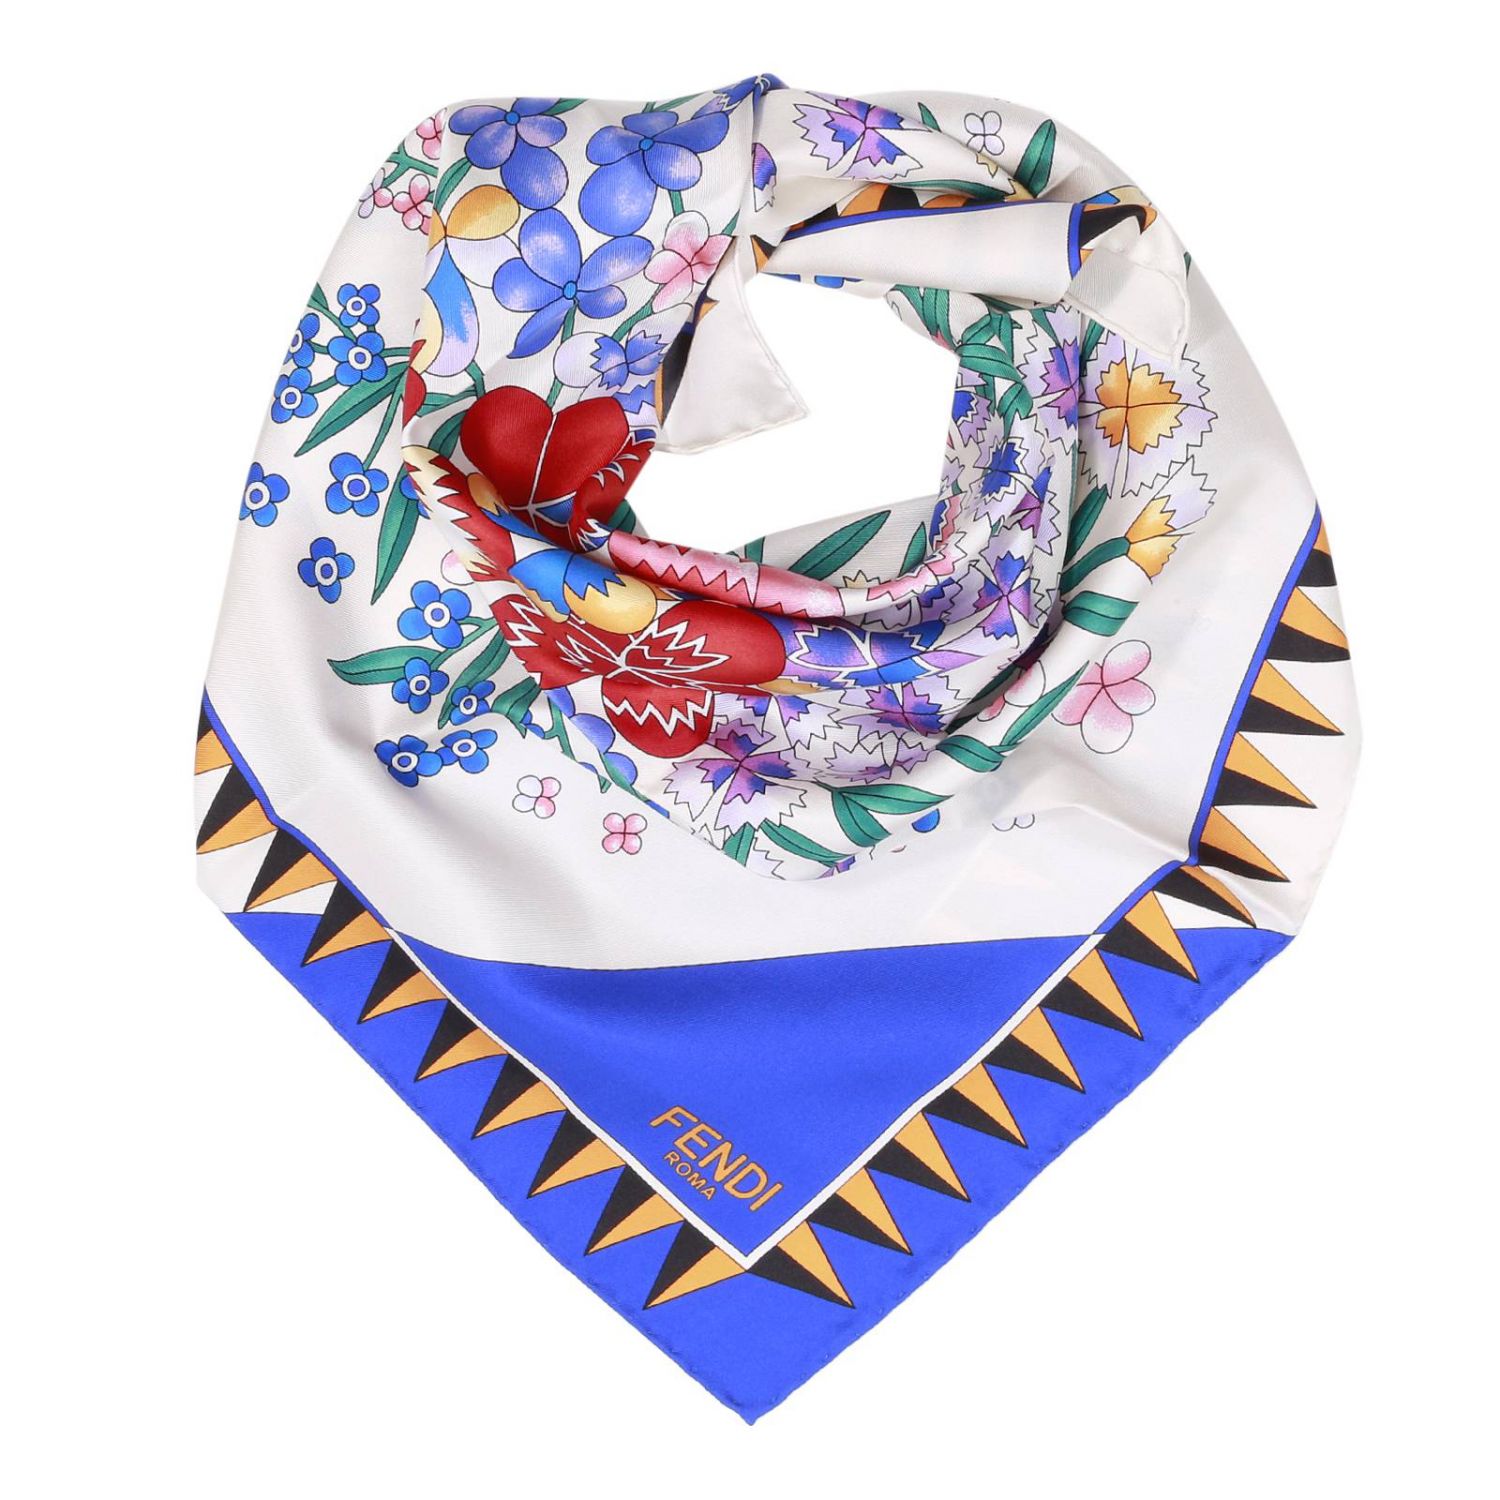 Foulard in pura seta con motivo floreale e geometrico | Foulard Fendi Donna Fantasia | Foulard